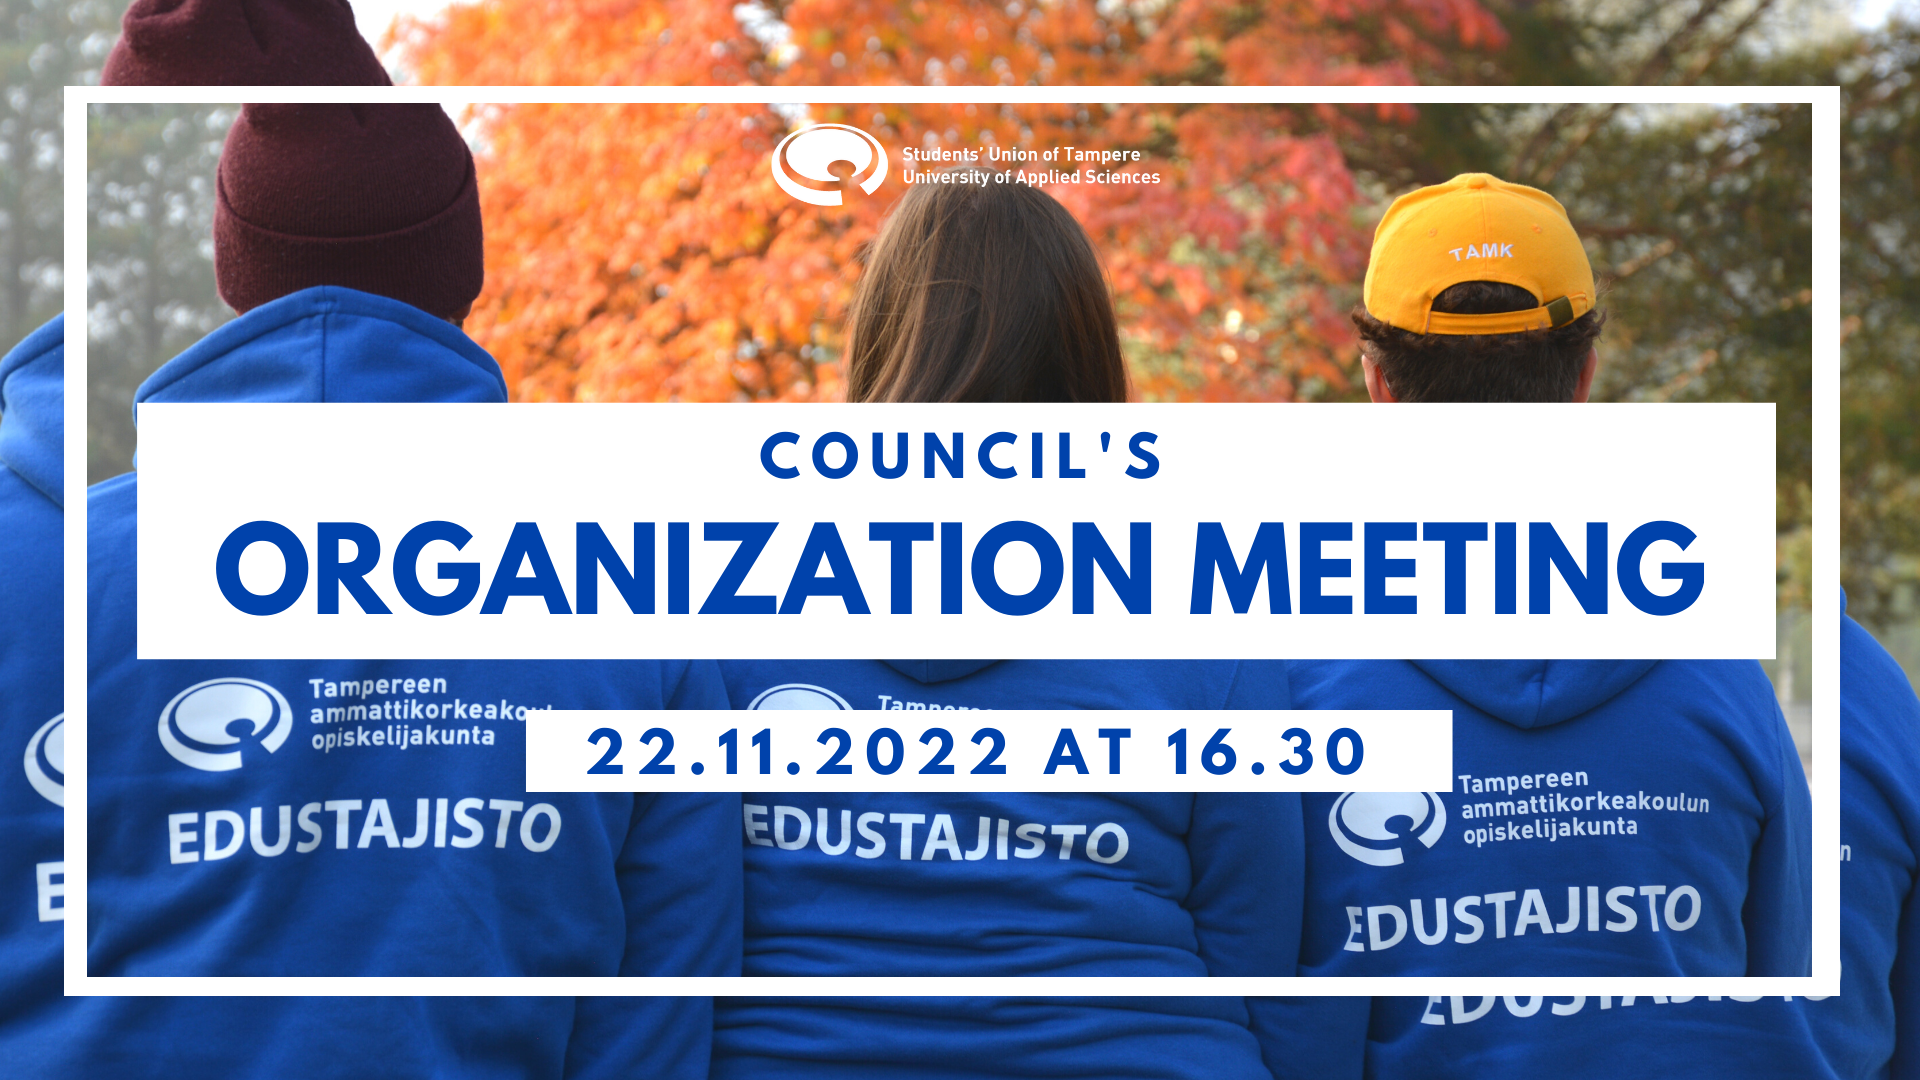 COUNCIL’S ORGANIZATION MEETING 22.11.2022